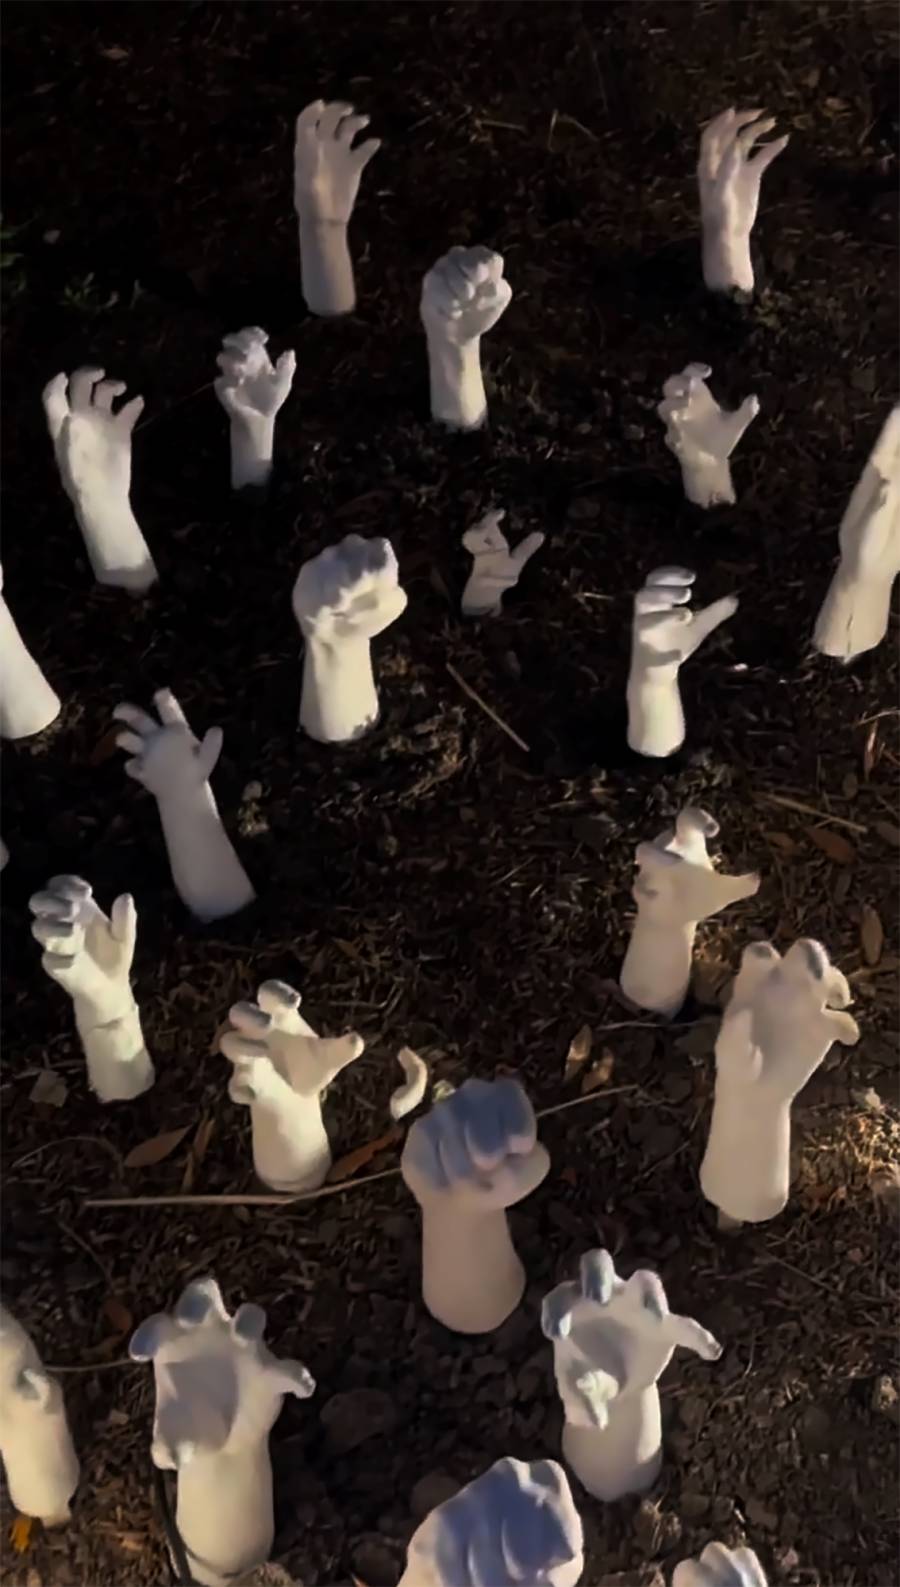 Kim Kardashian Shares Her Spooky Skeleton Halloween Decorations